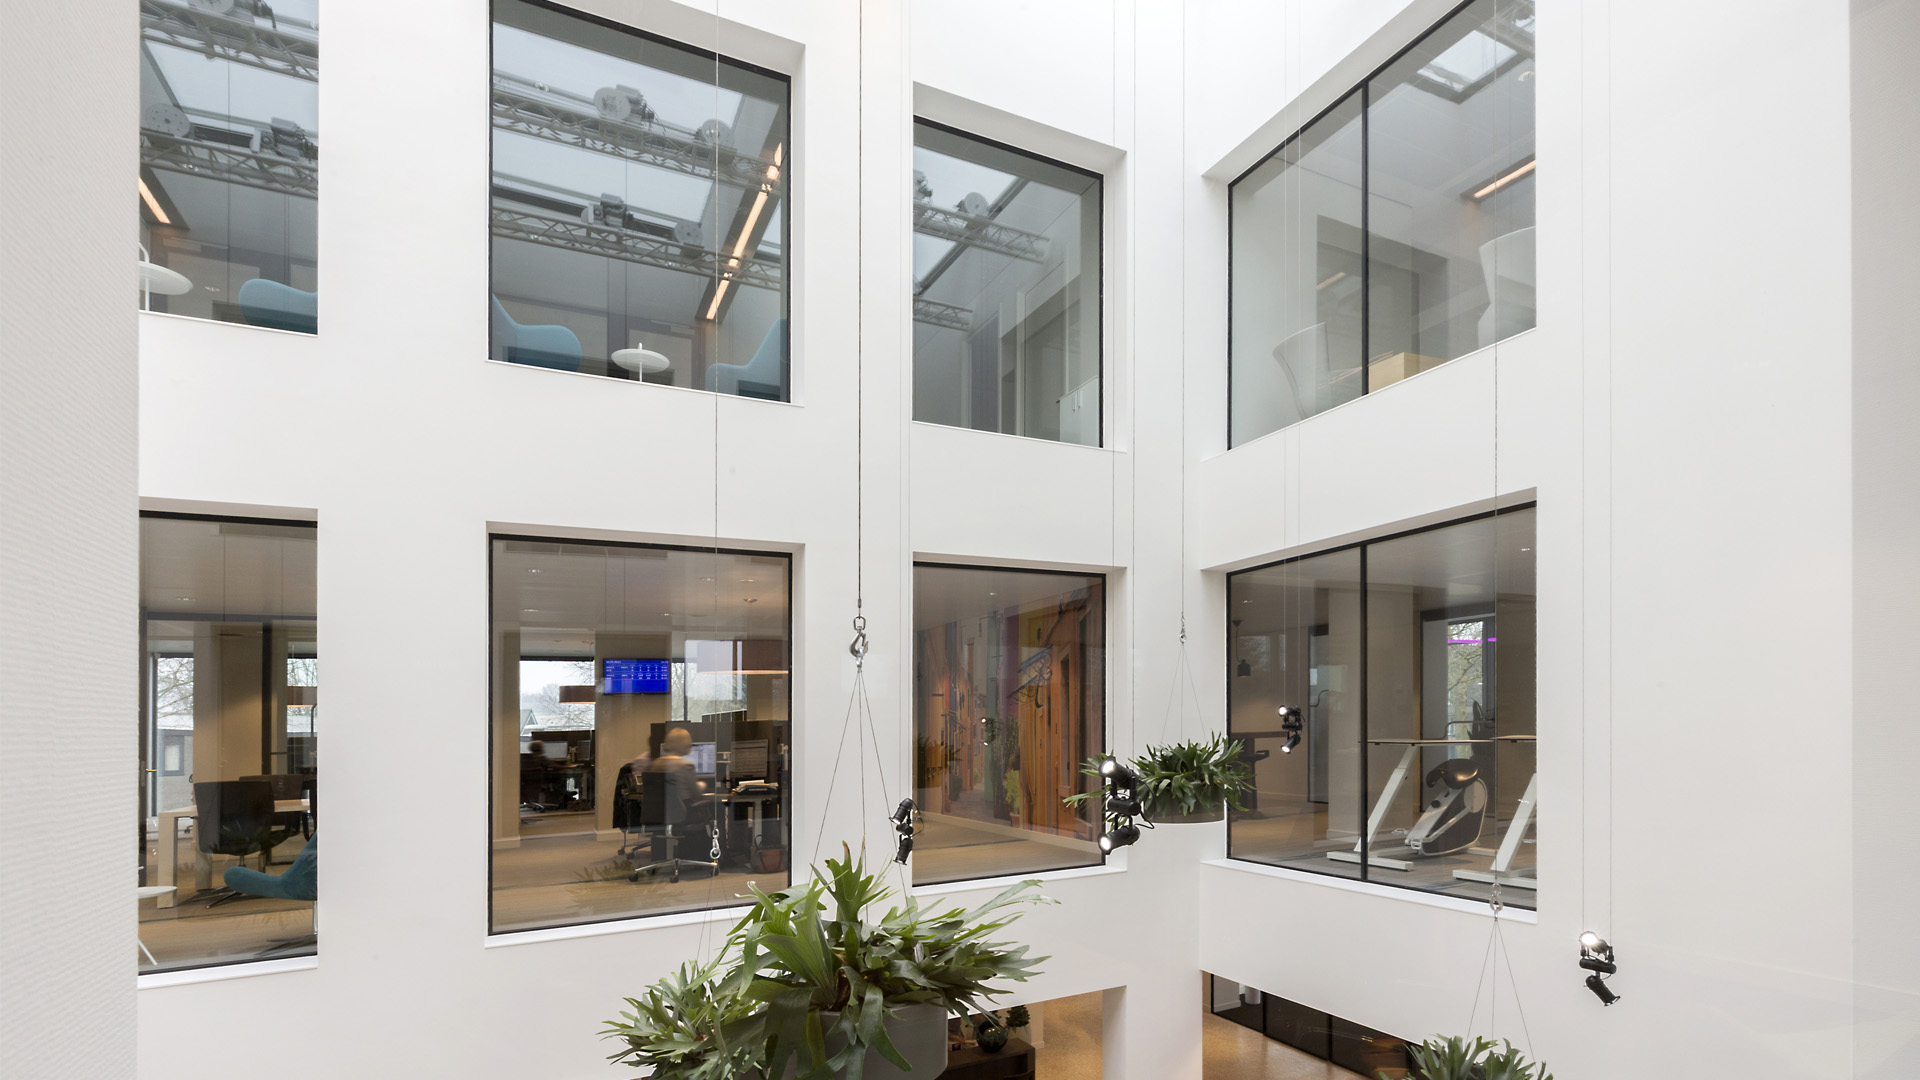 Steel glazed walls in the Rabobank office building in Geldrop the Netherlands